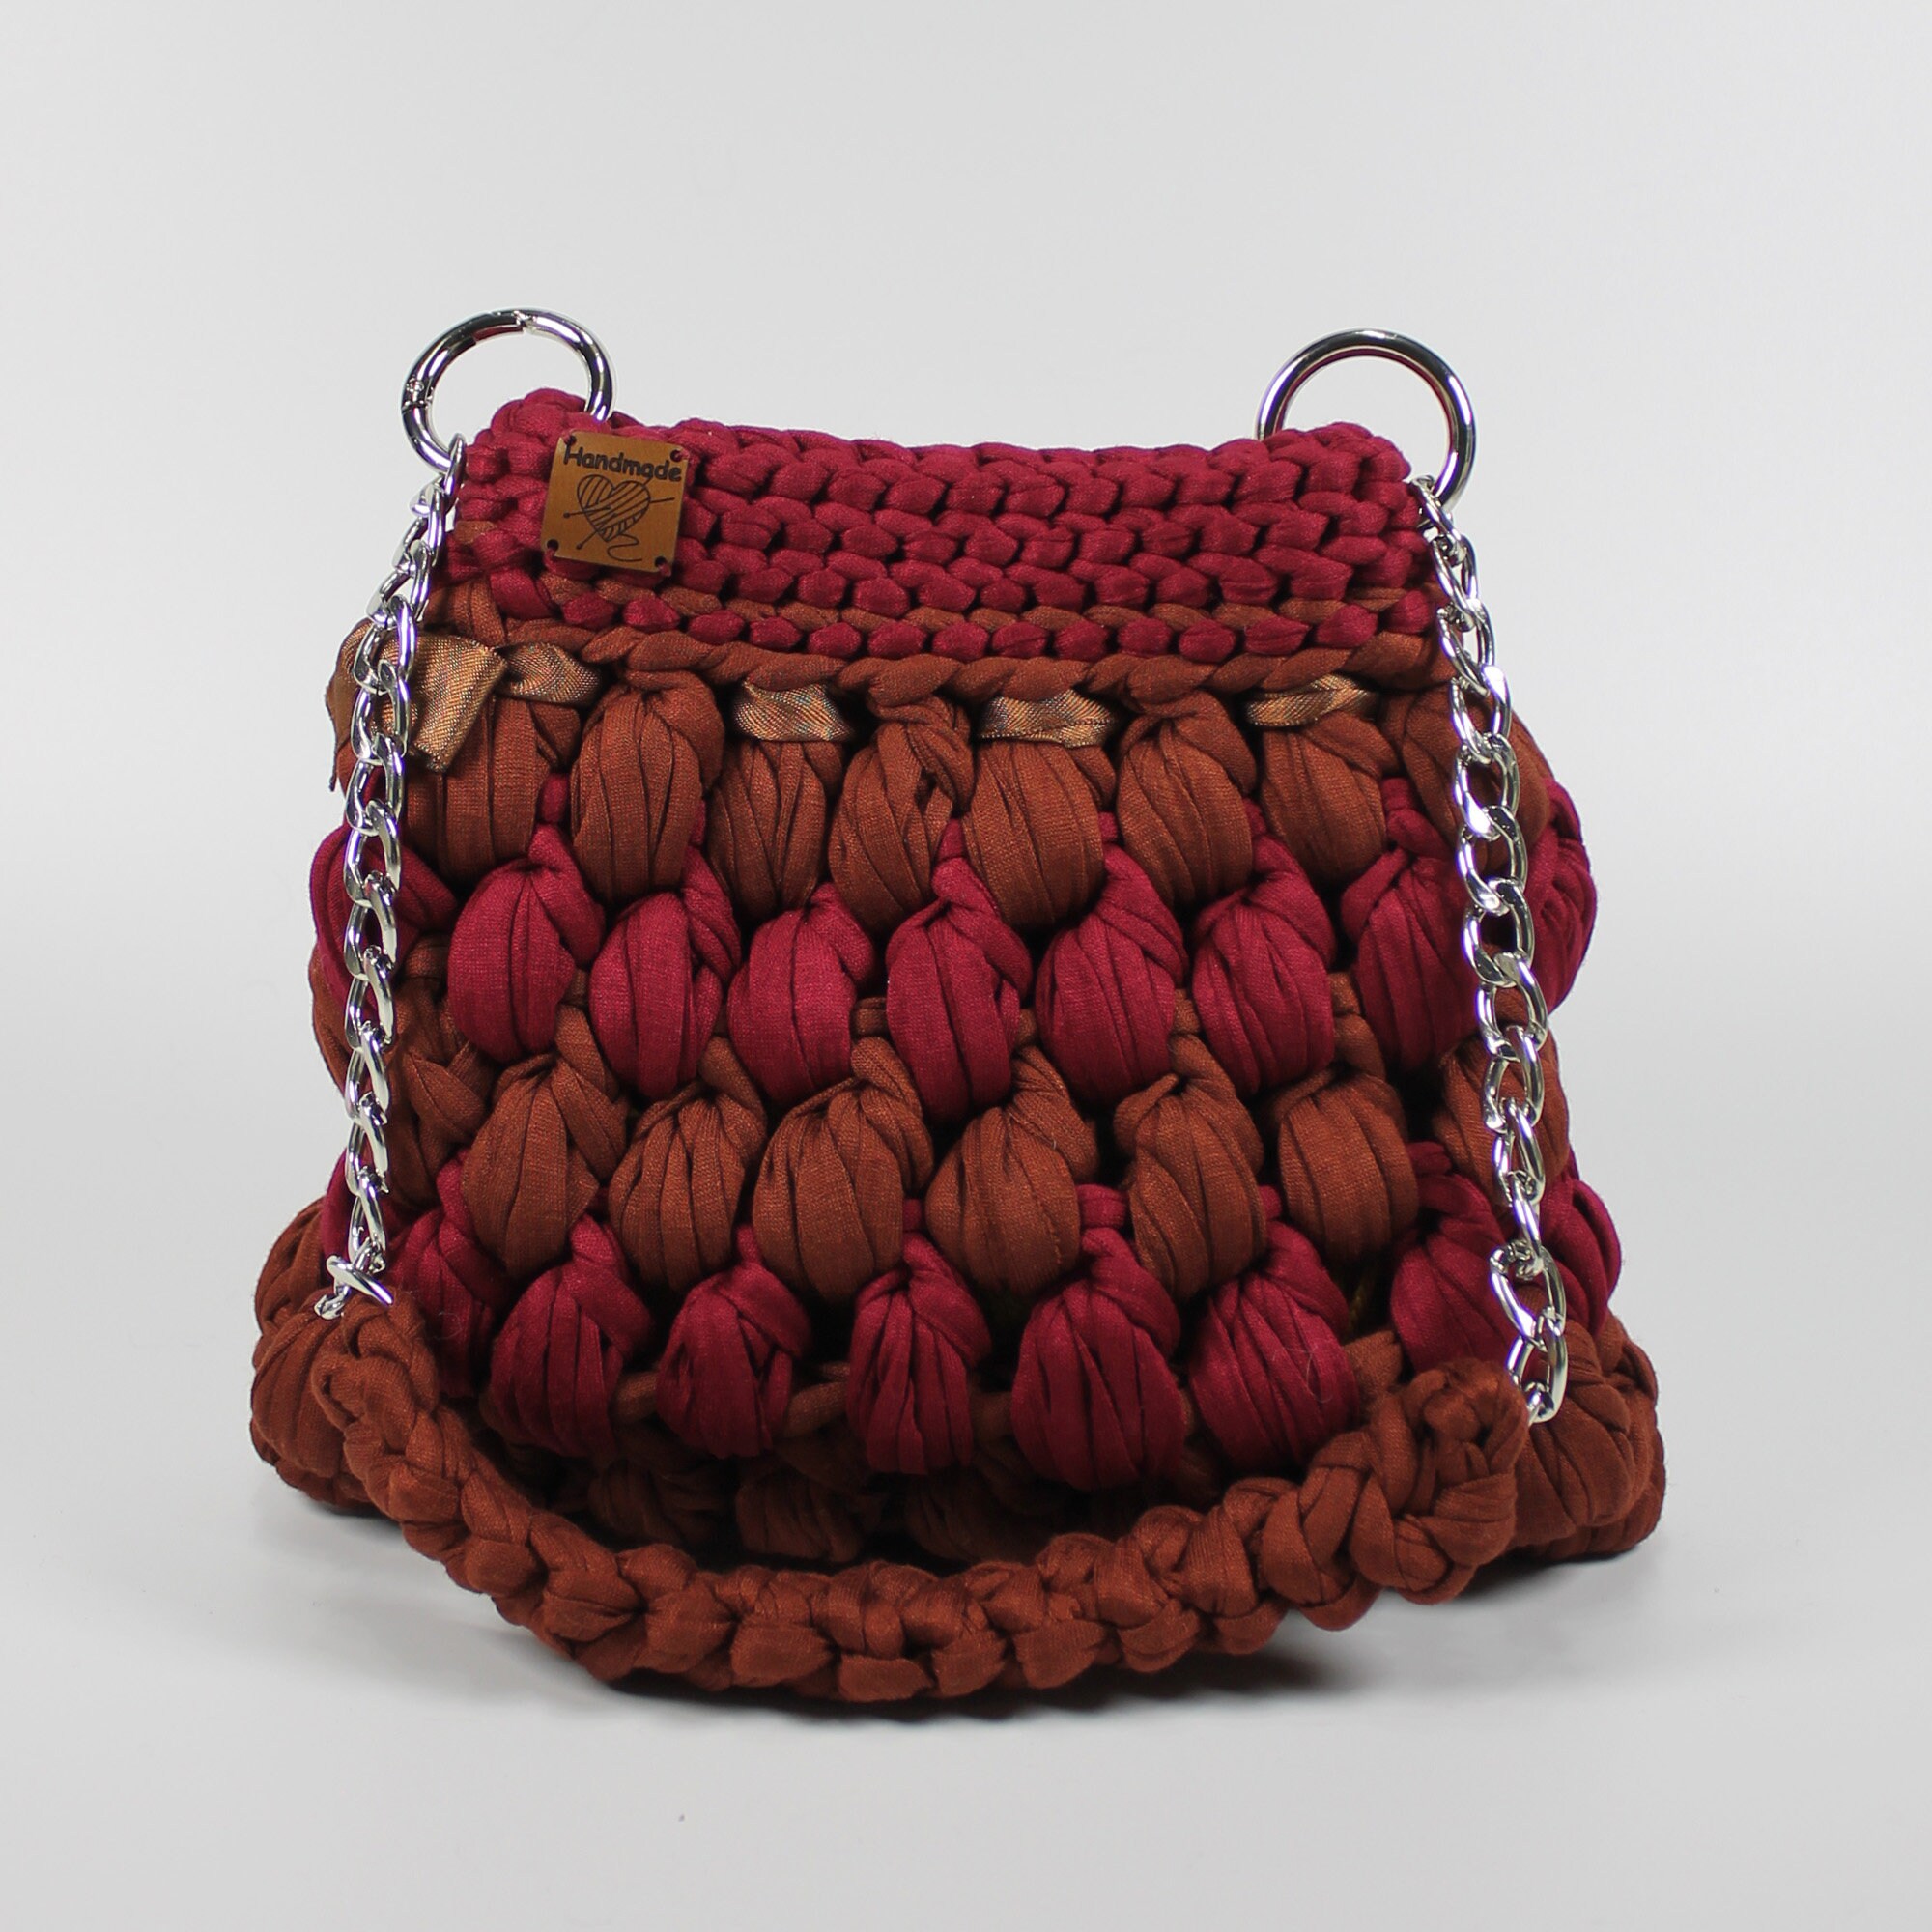 Handmade Women Girls T - Shirt Yarn Crochet Handbags, Shoulder Bag NEW